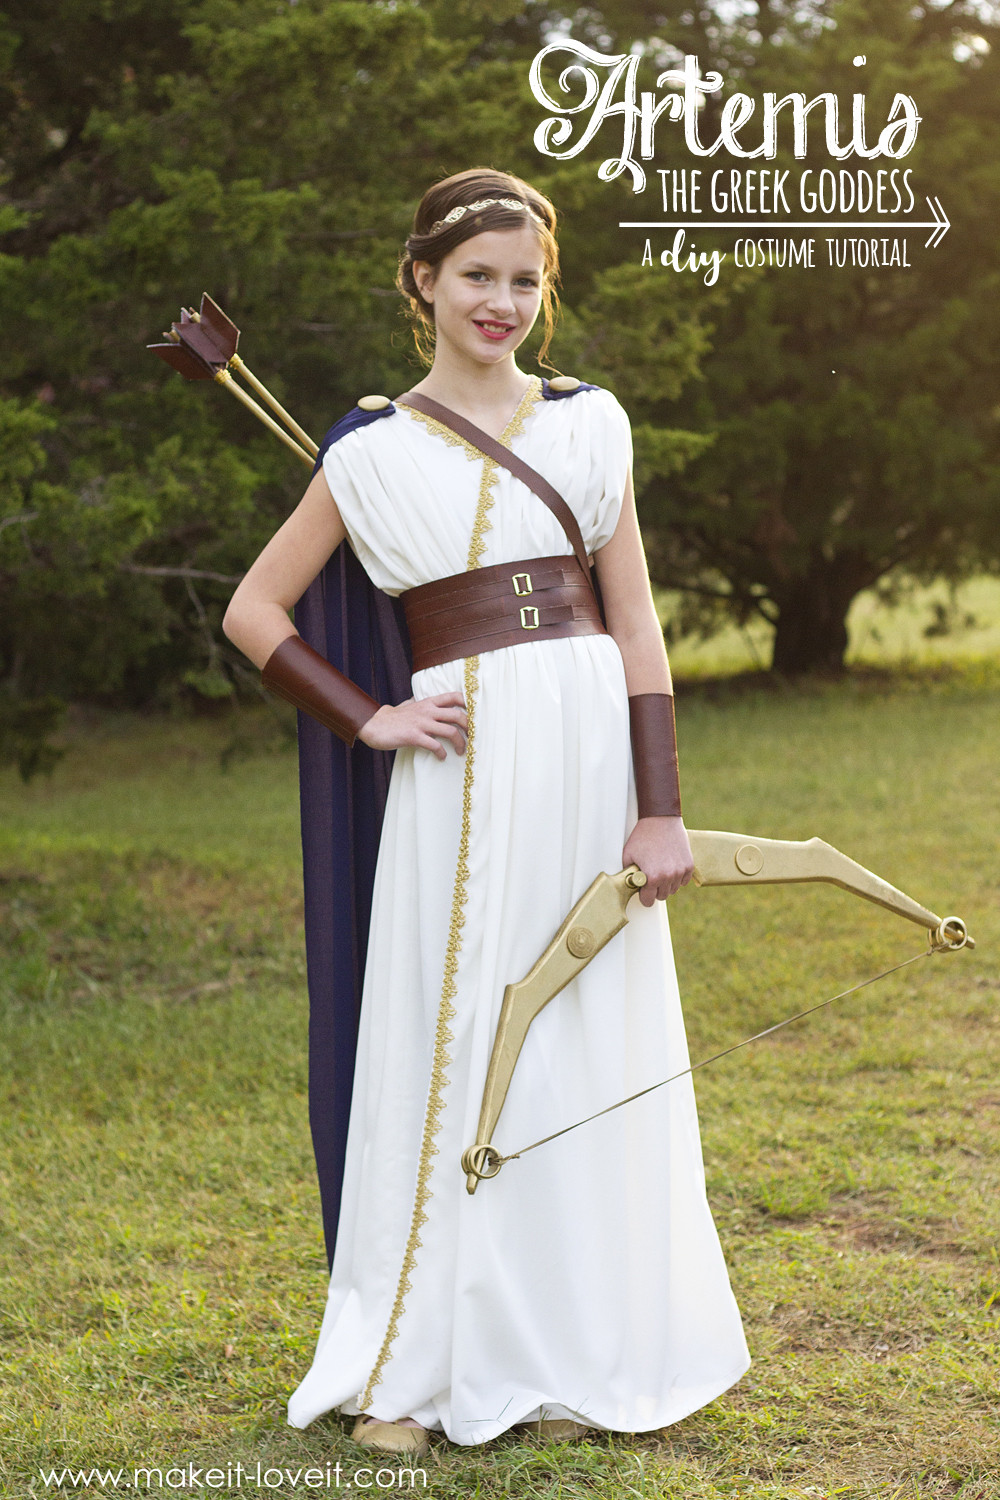 Best ideas about Greek God Costume DIY
. Save or Pin DIY Greek Goddess Costume ARTEMIS Now.